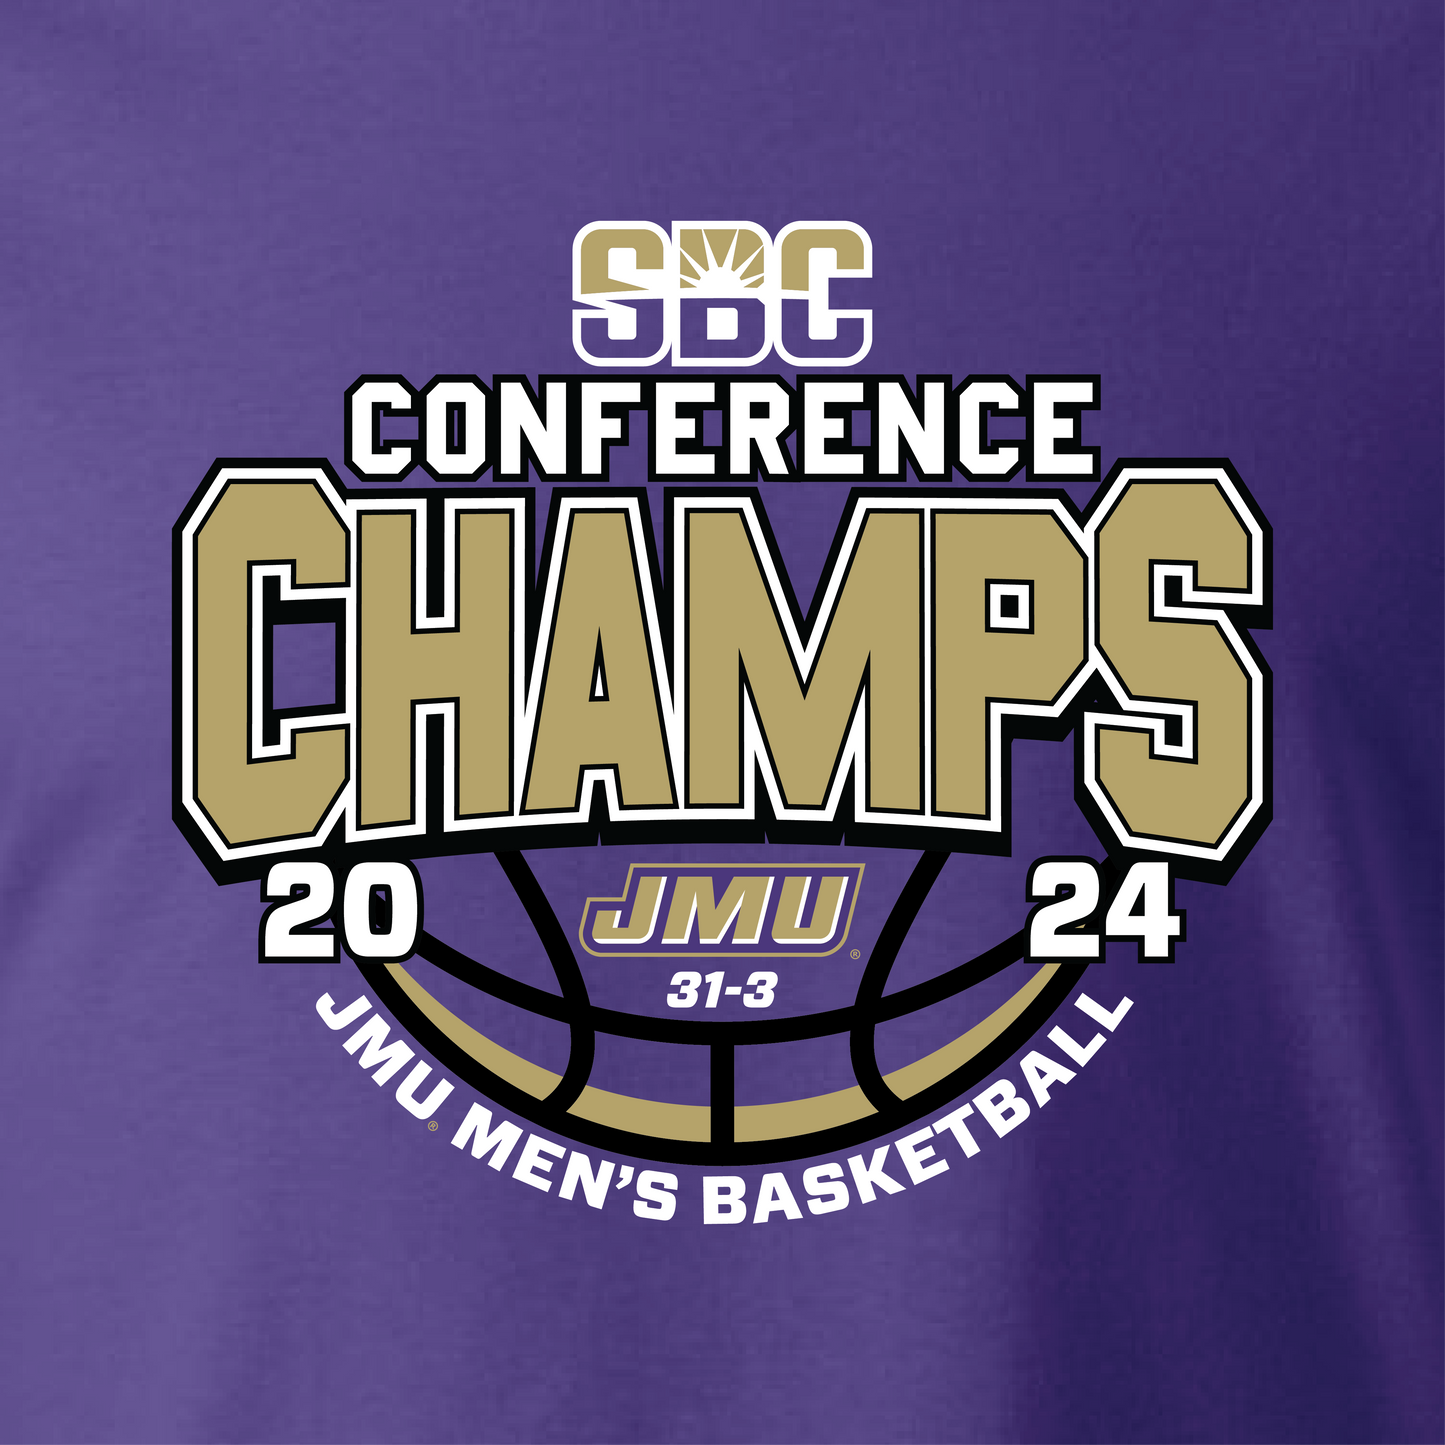 Classic - JMU Men's Basketball SBC Champs T-Shirt